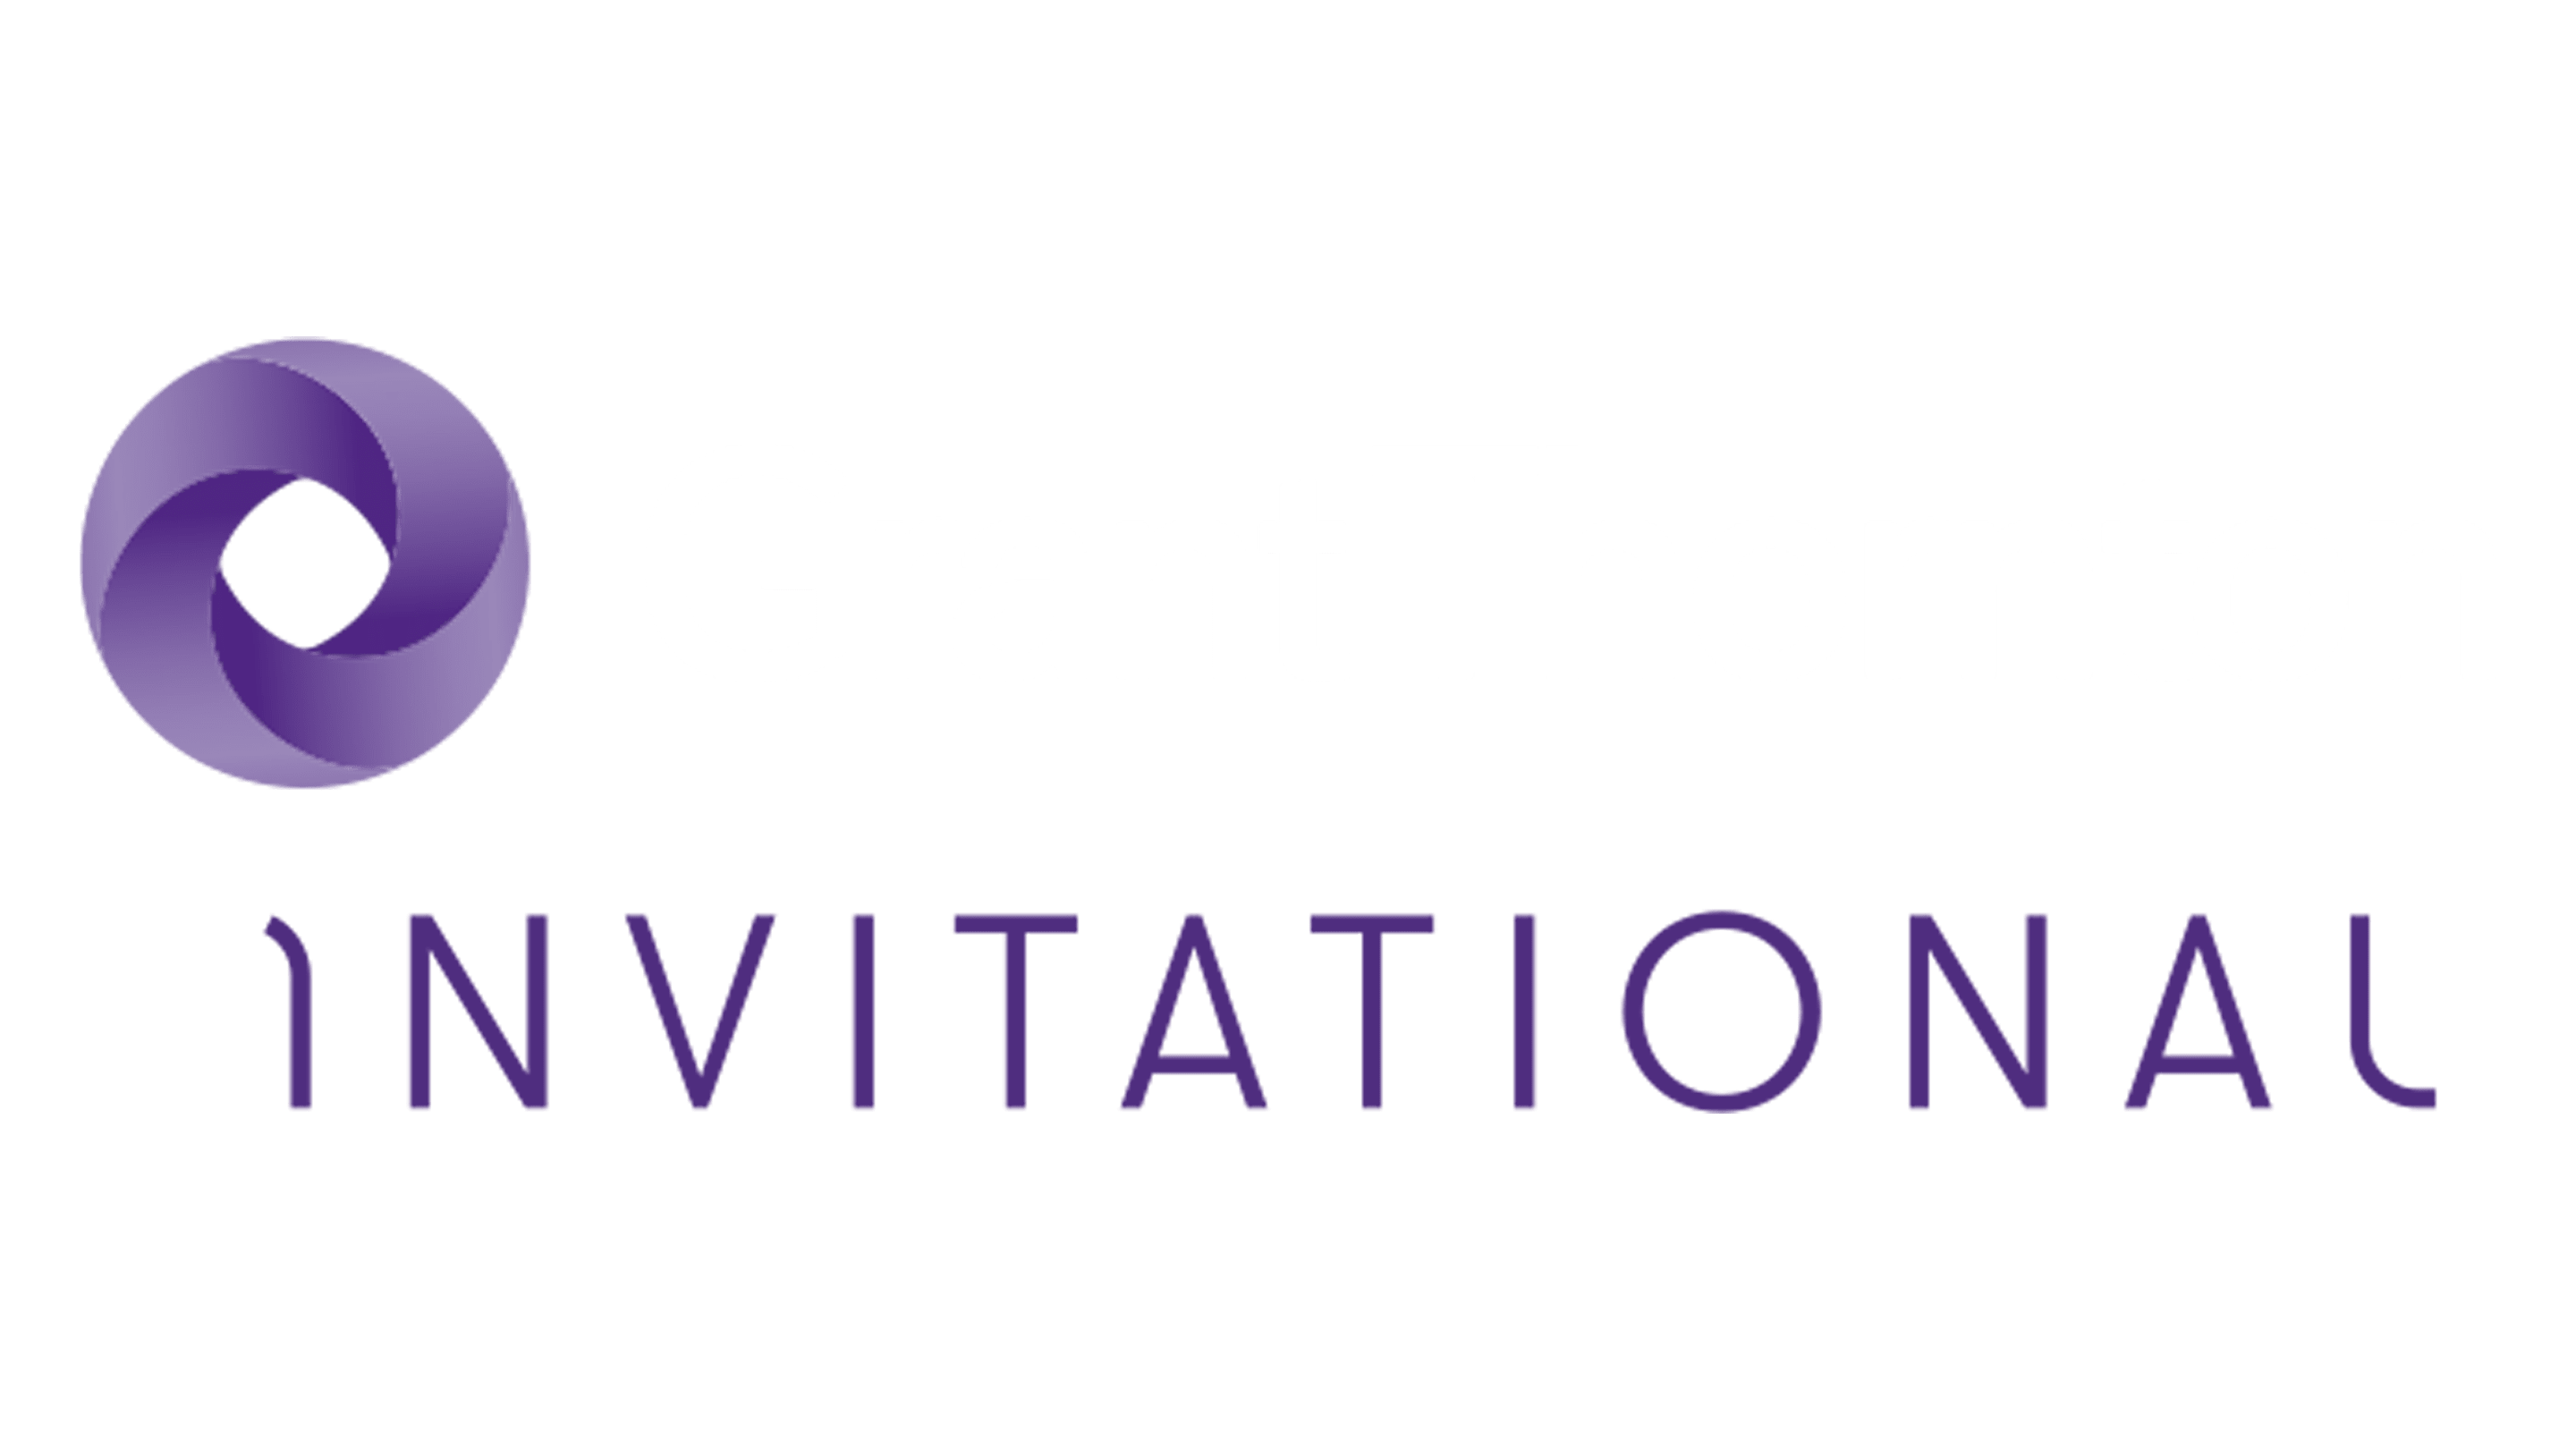 Grant Thornton Invitational